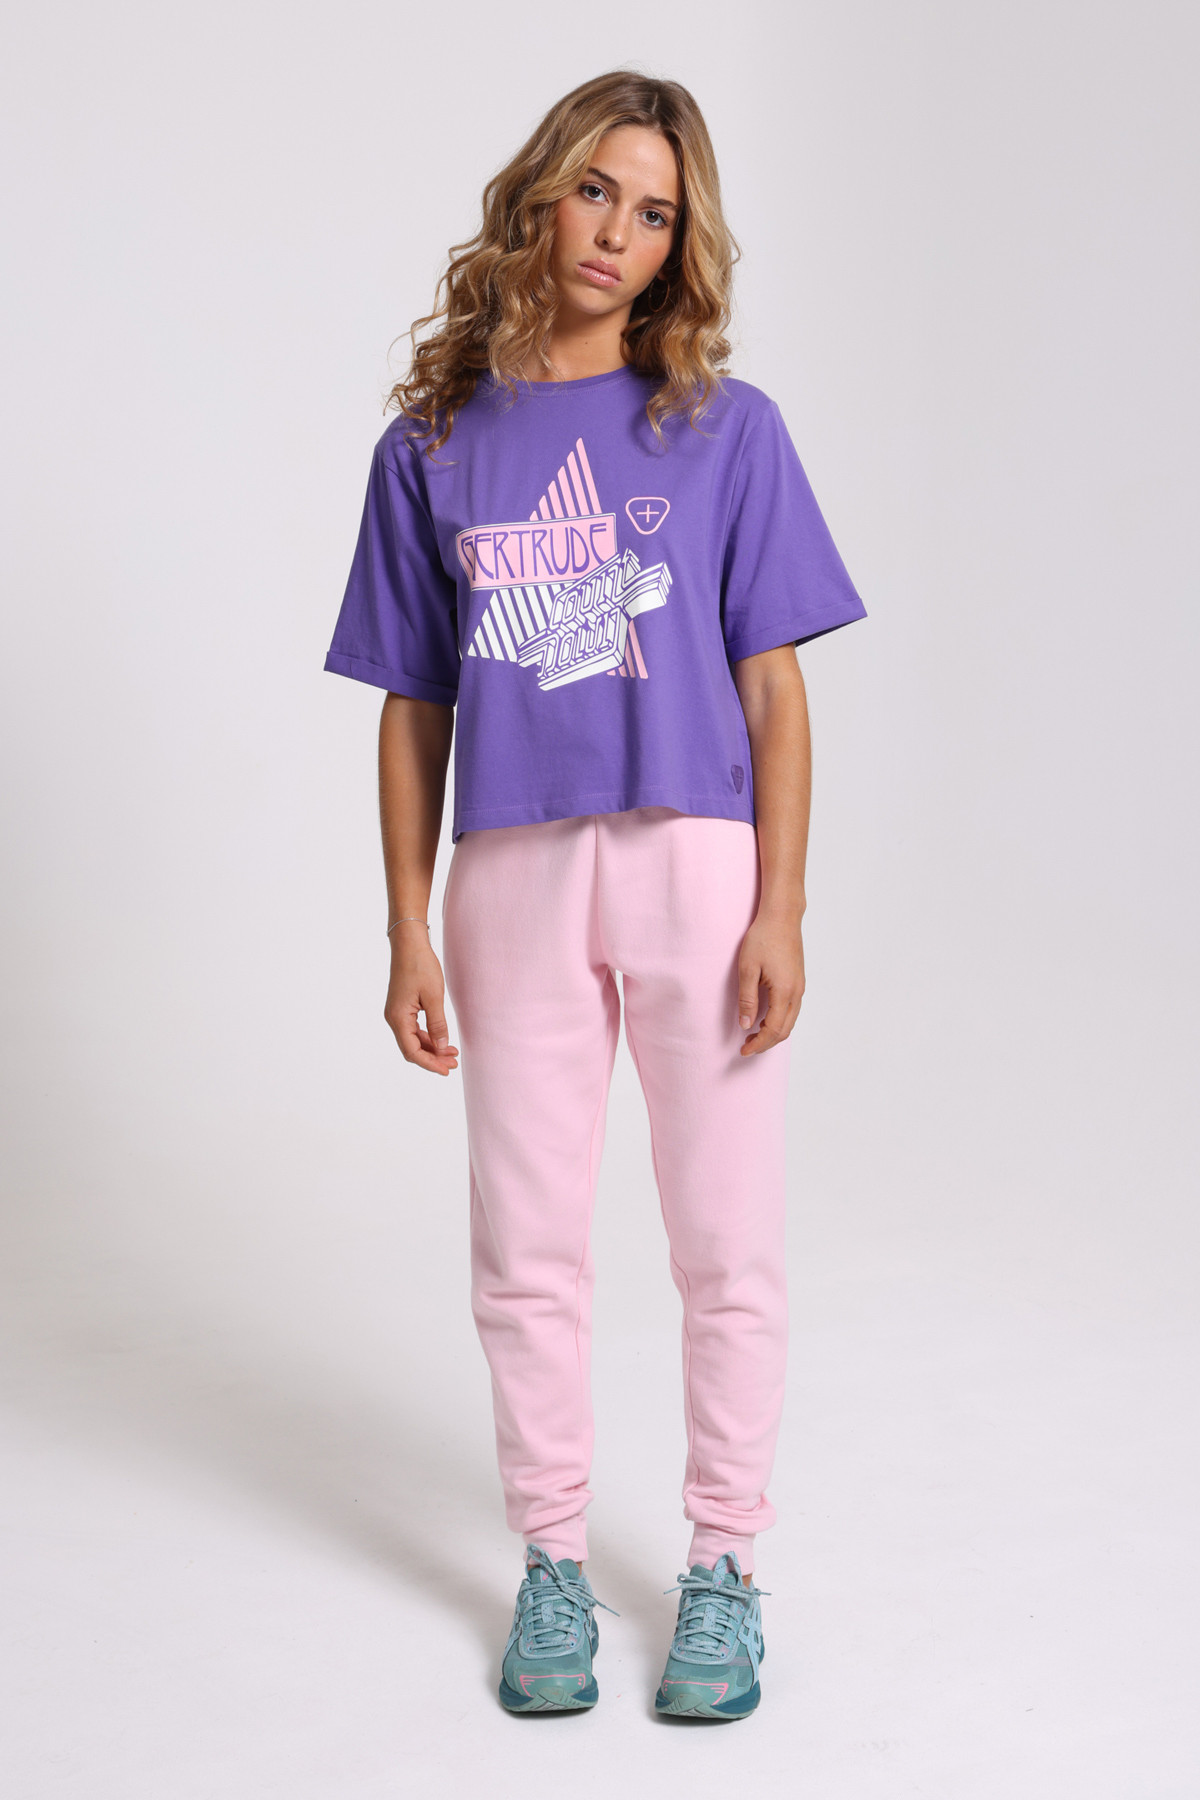 T-shirt col rond femme LISETTE violet GertrudeGaston